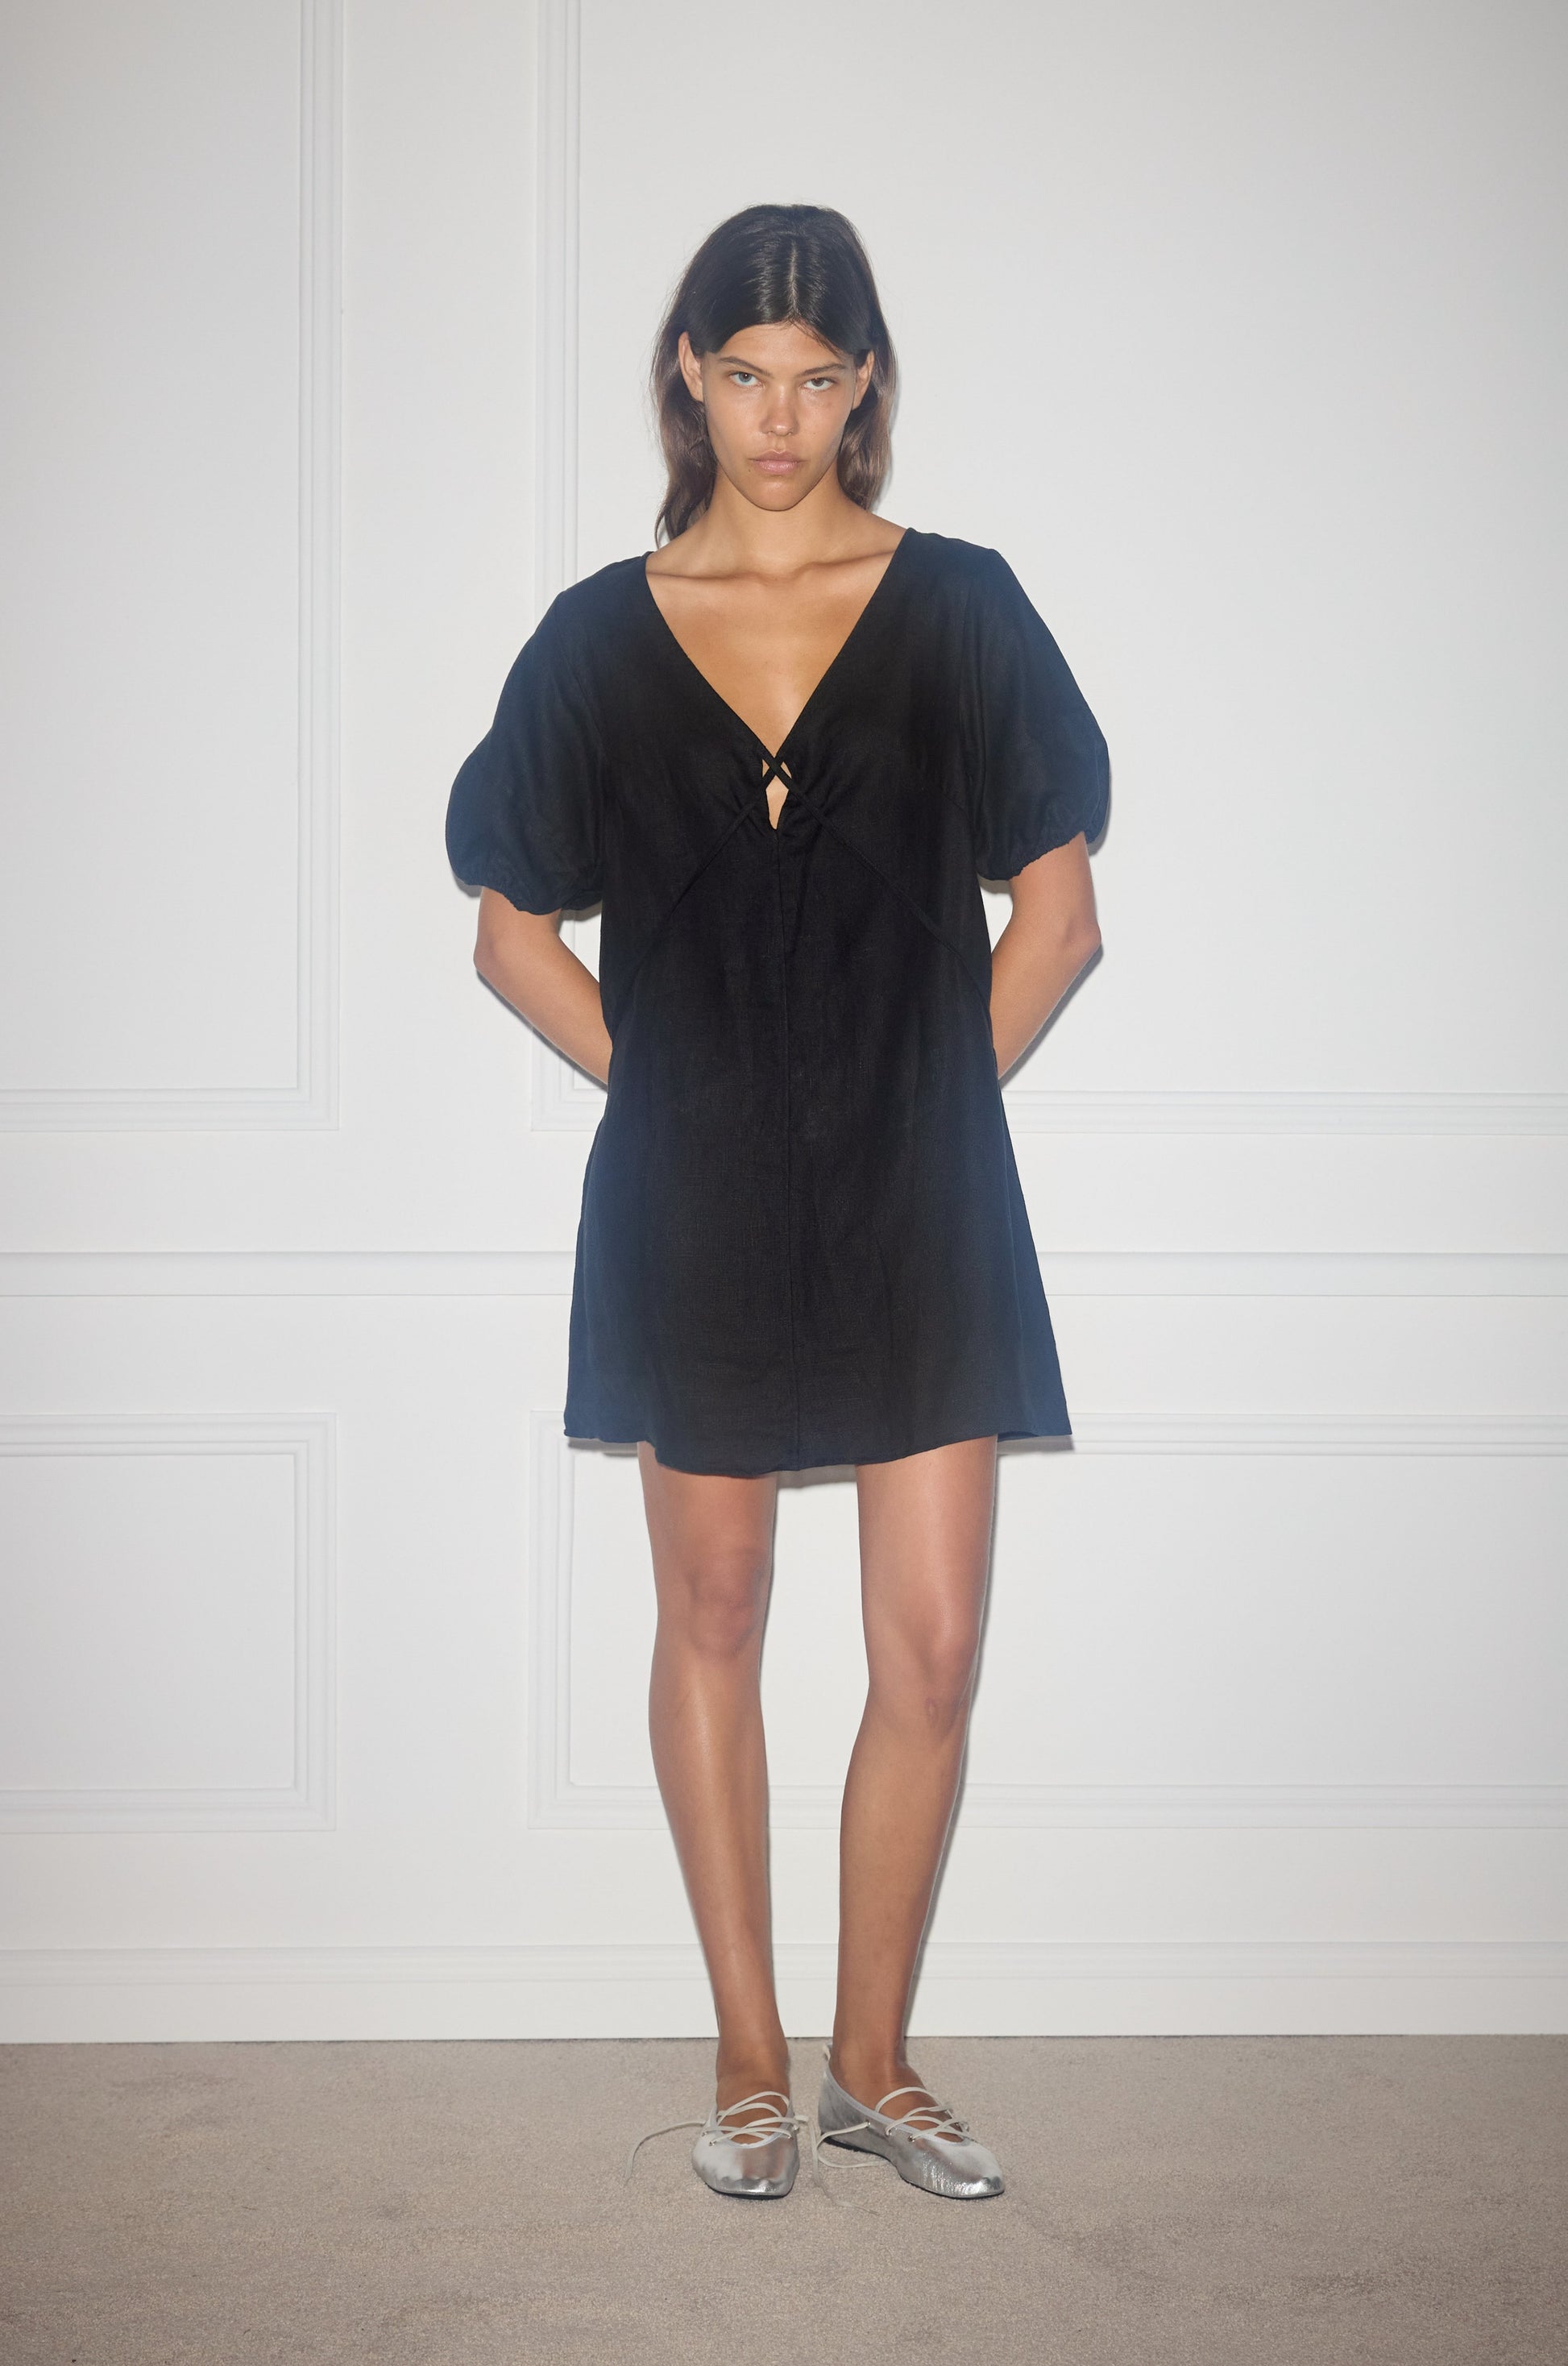 Tie Seamed Short Dress - Black by Deiji Studios against plain background